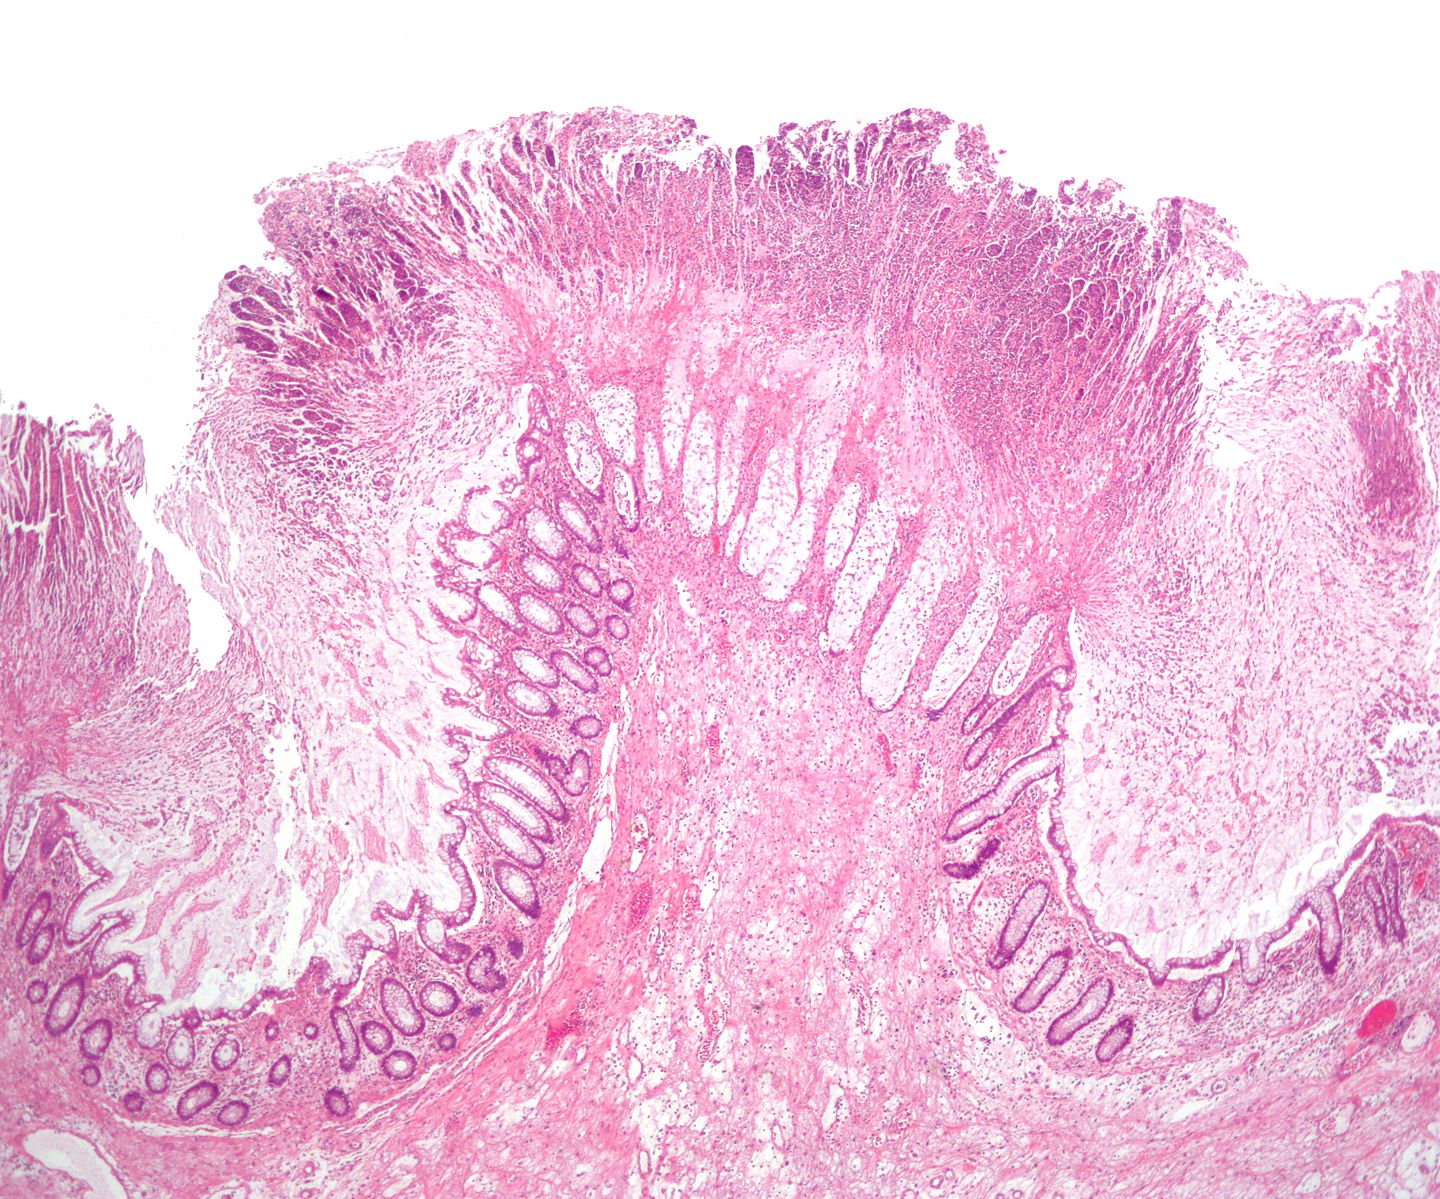 Pseudomembranous colitis. H& E staining showing pseudomembranes in Clostridium colitis [39]